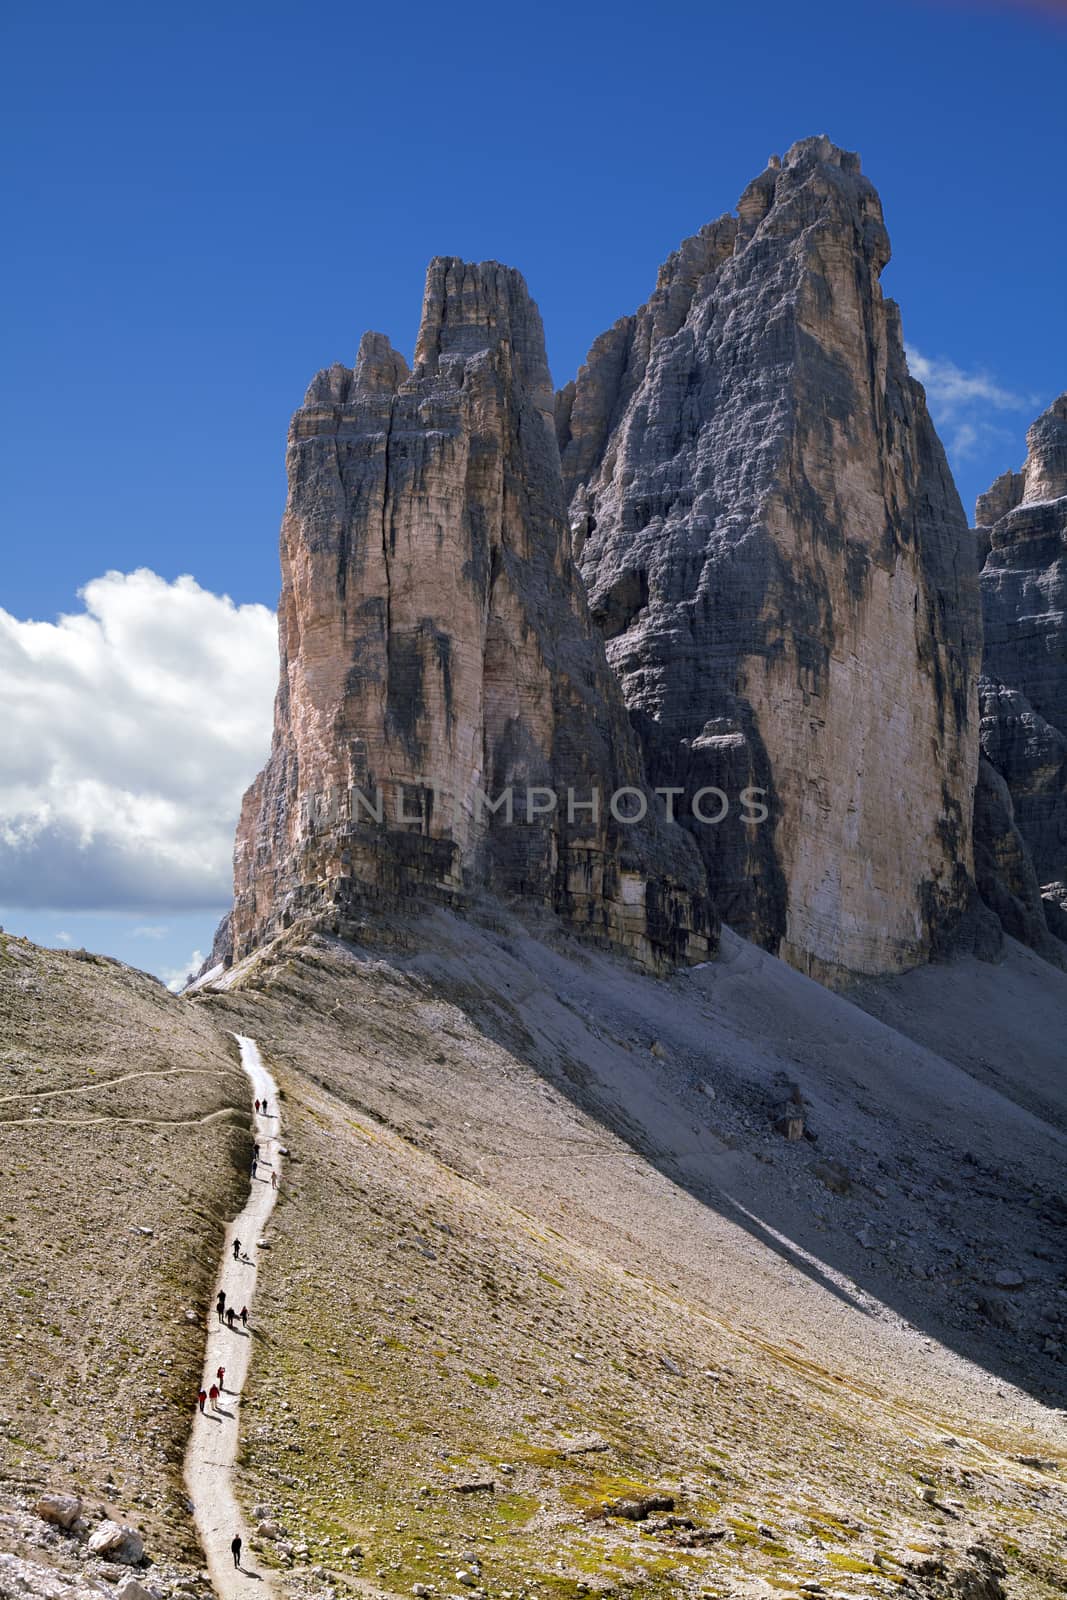 The Tre Cime di Lavaredo, three peaks in the Sexten Dolomites of Northern Italy